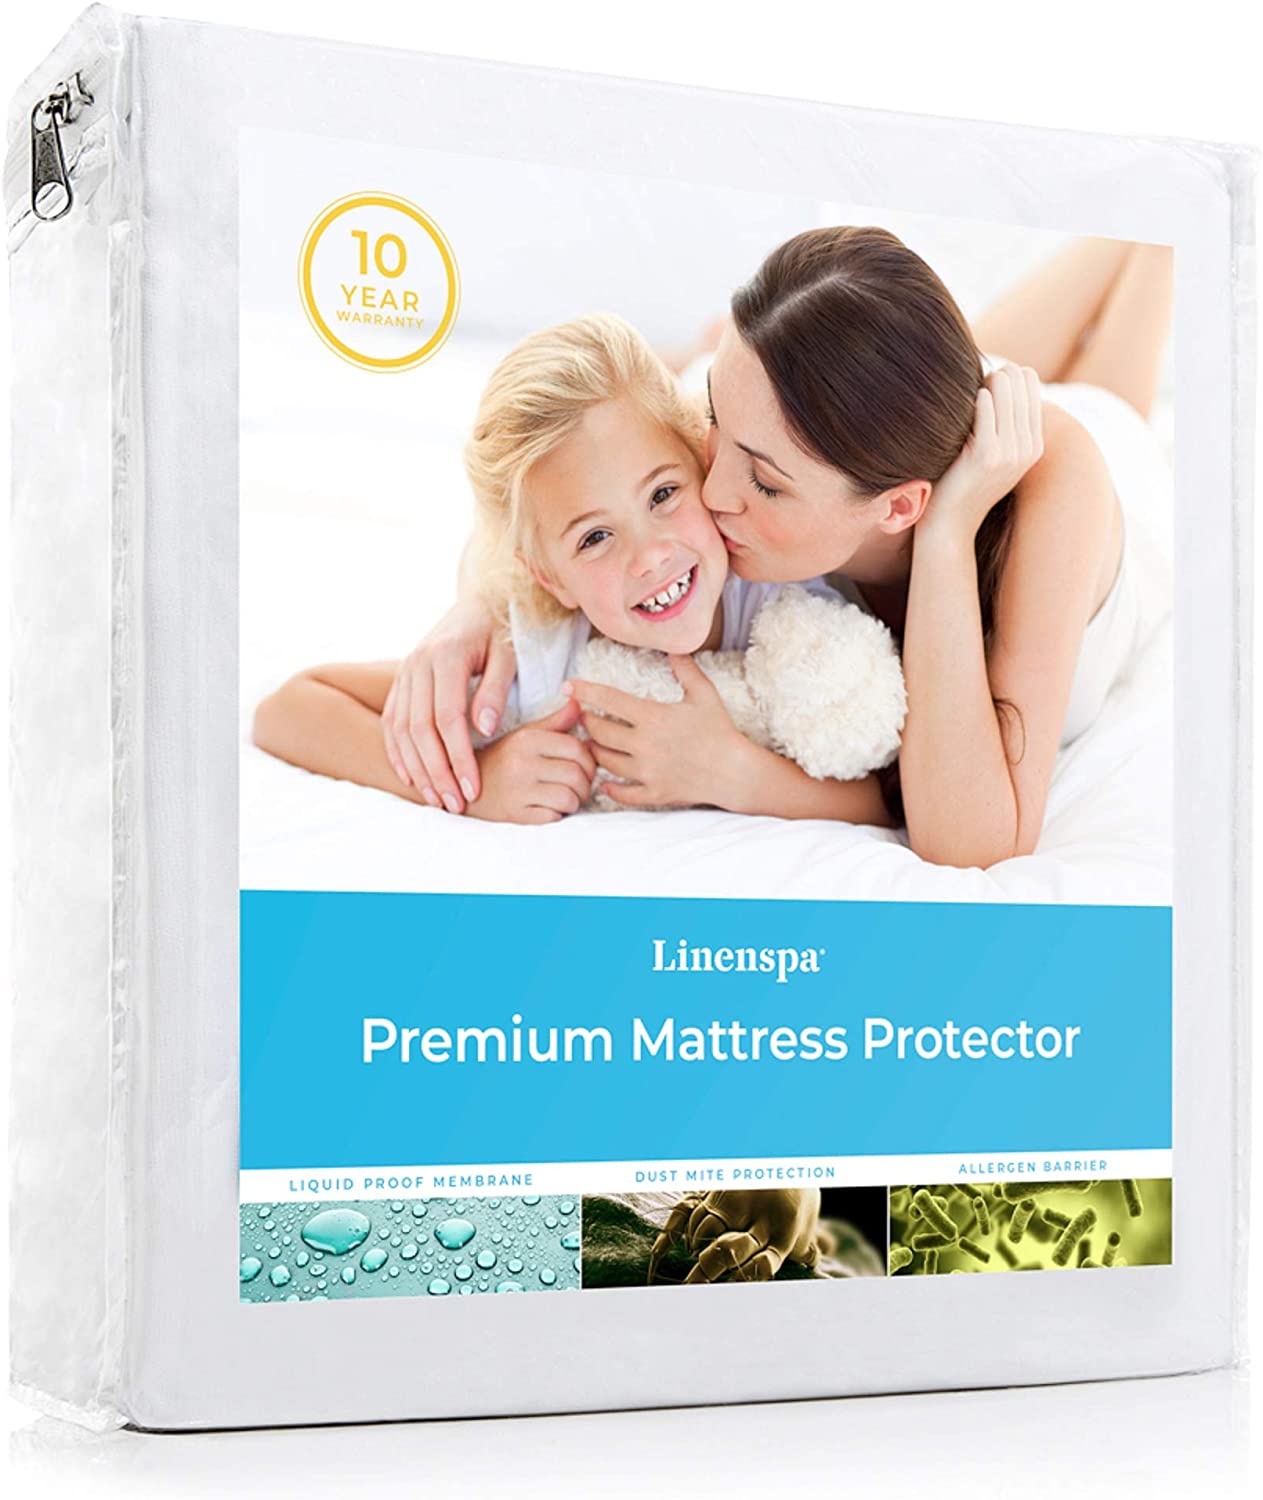 Linenspa Vinyl Free Waterproof Mattress Cover